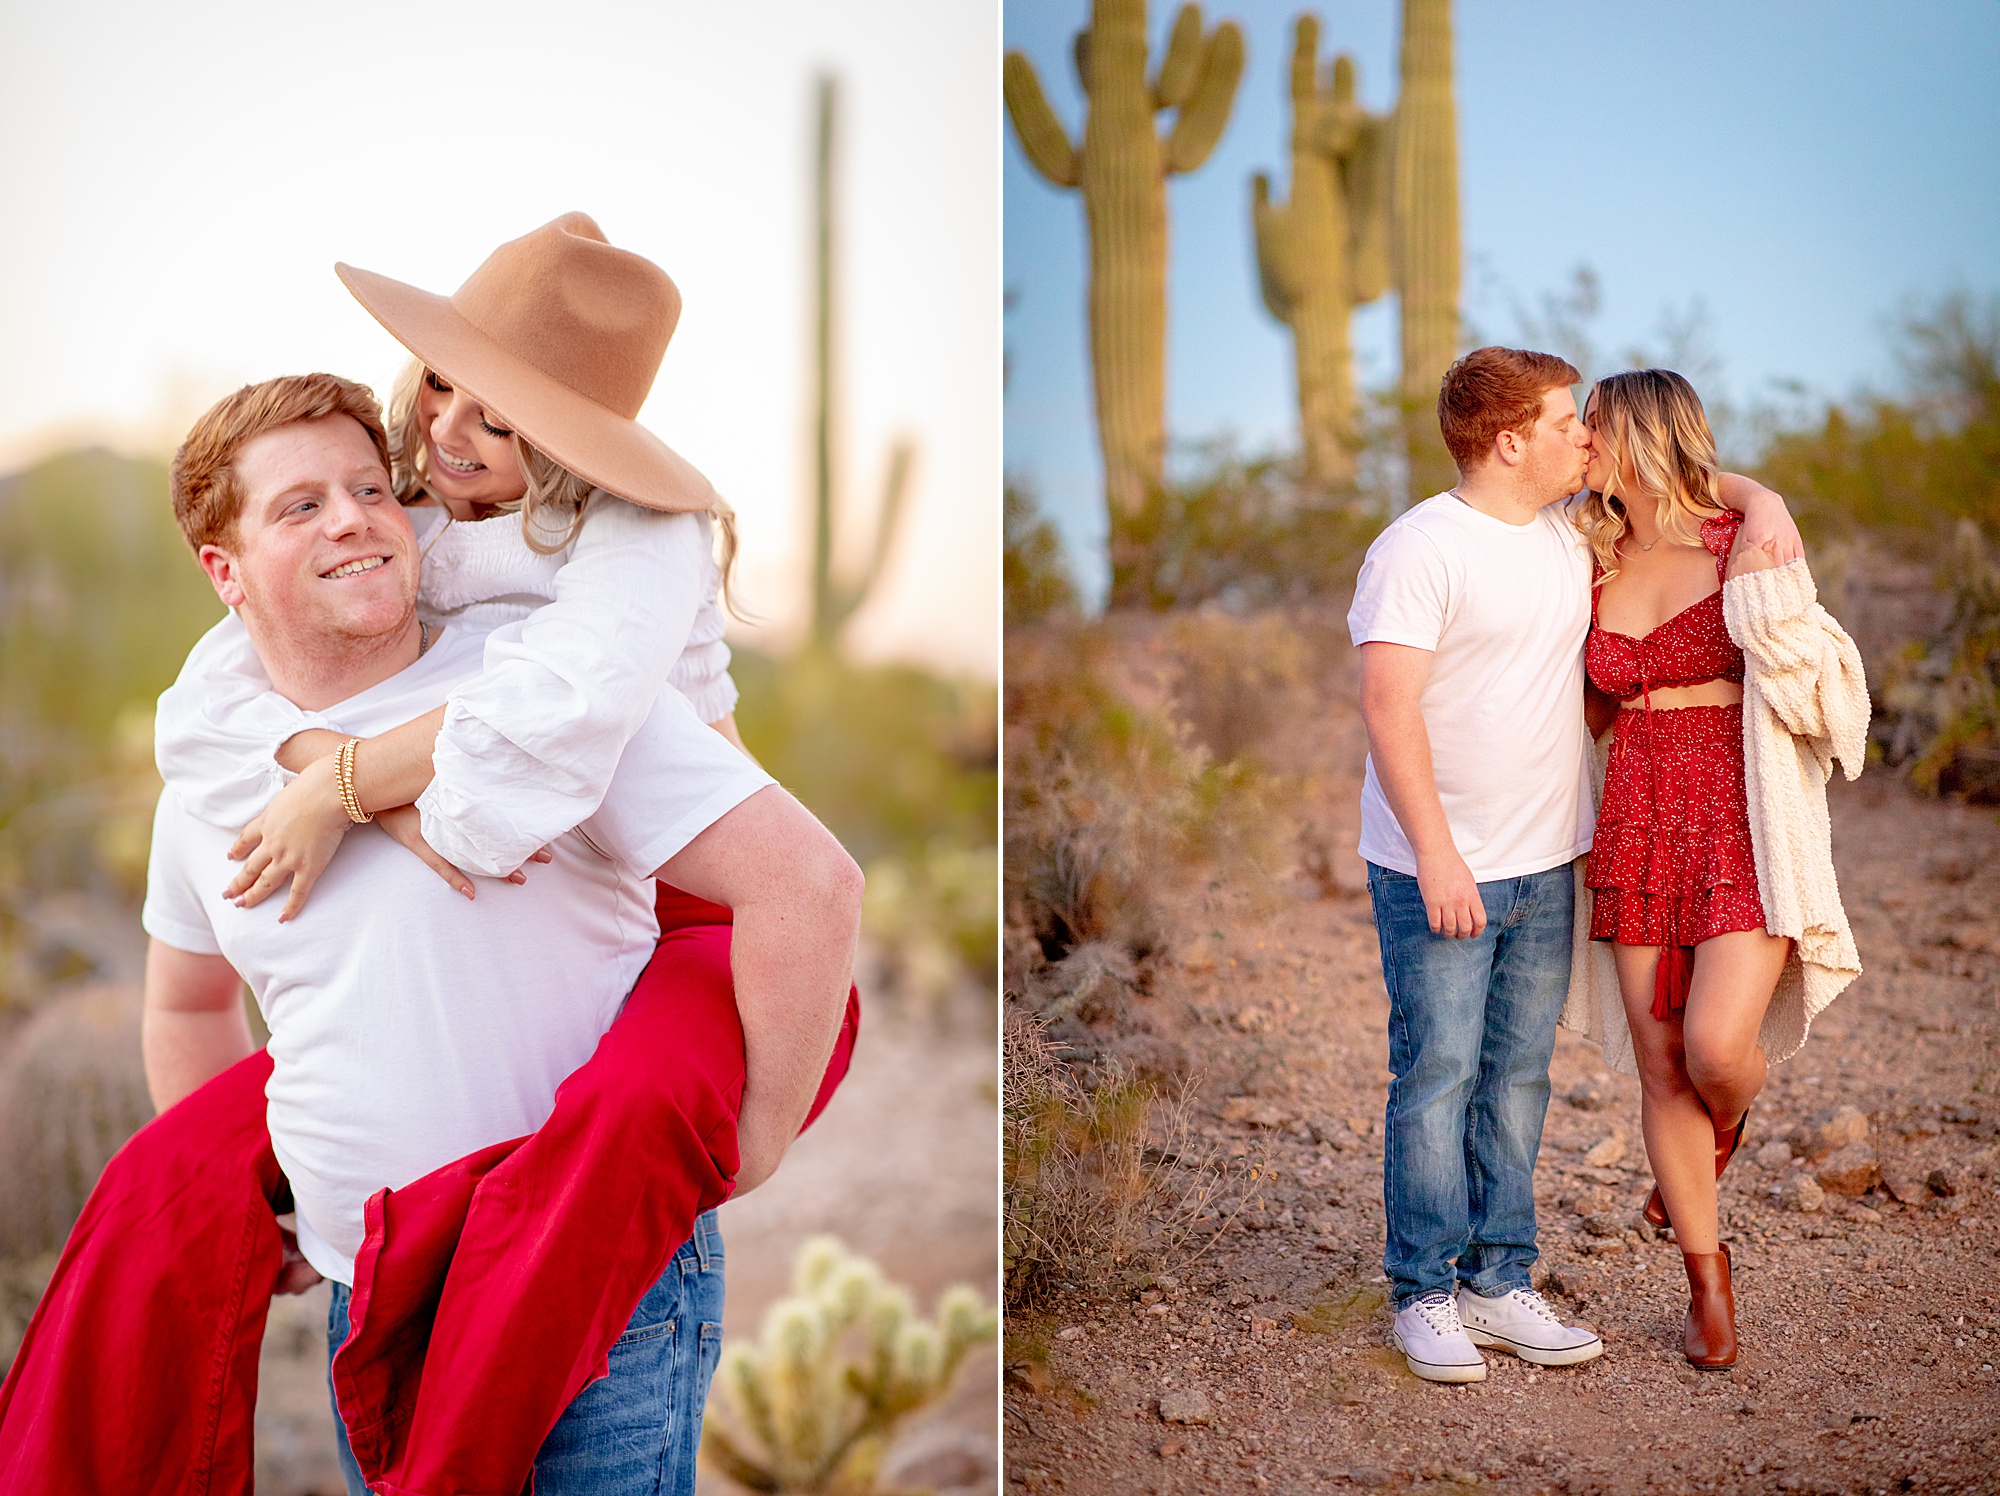 traveling portrait photographer captures couple in desert 